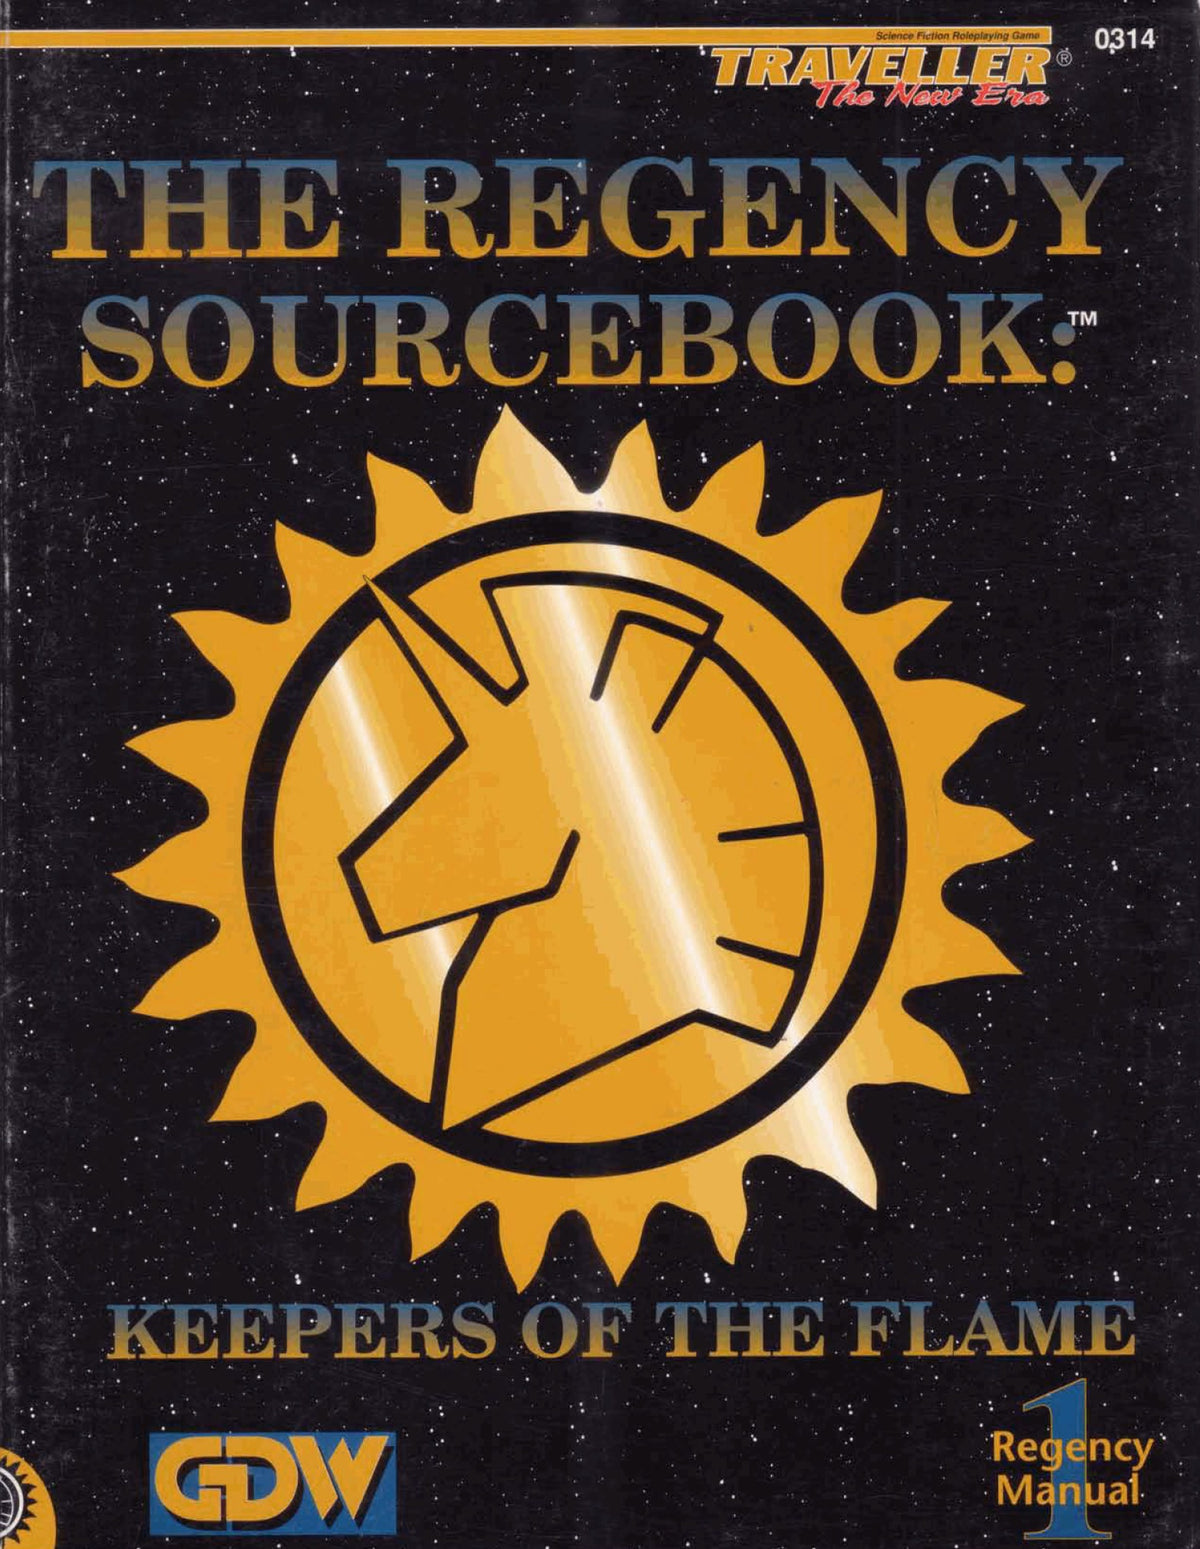 The Regency Sourcebook ebook